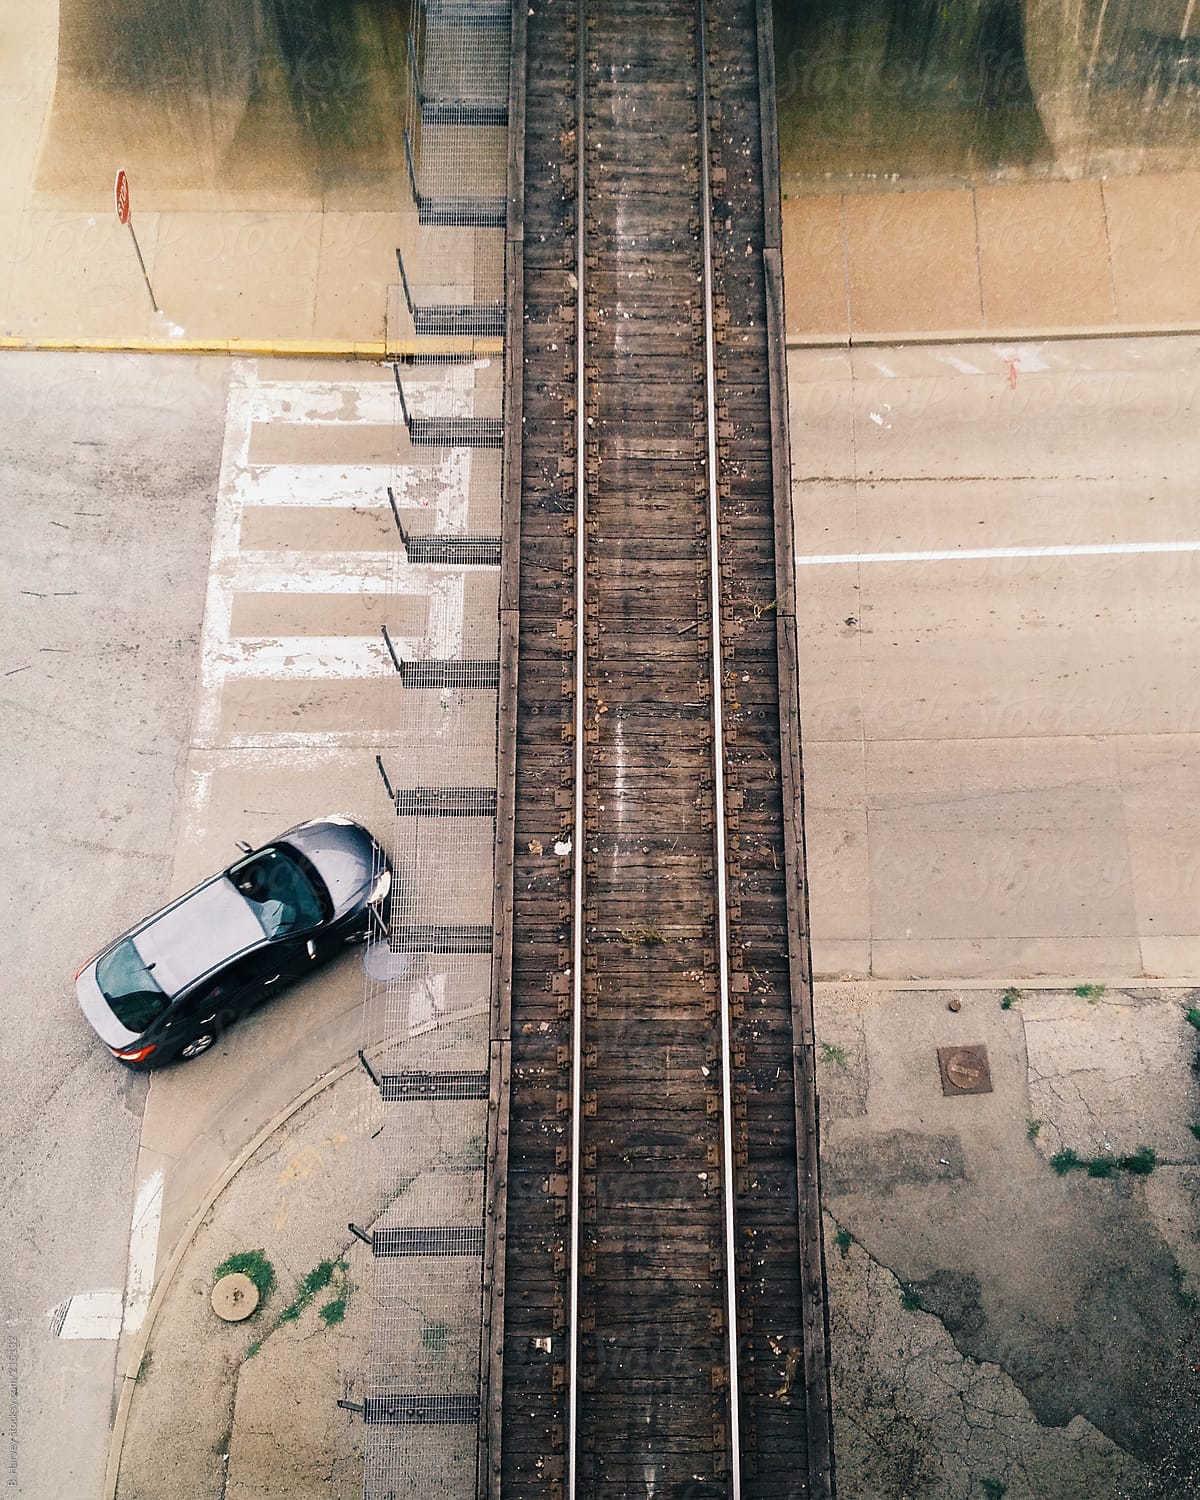 Car Driving Under Raised Train Track